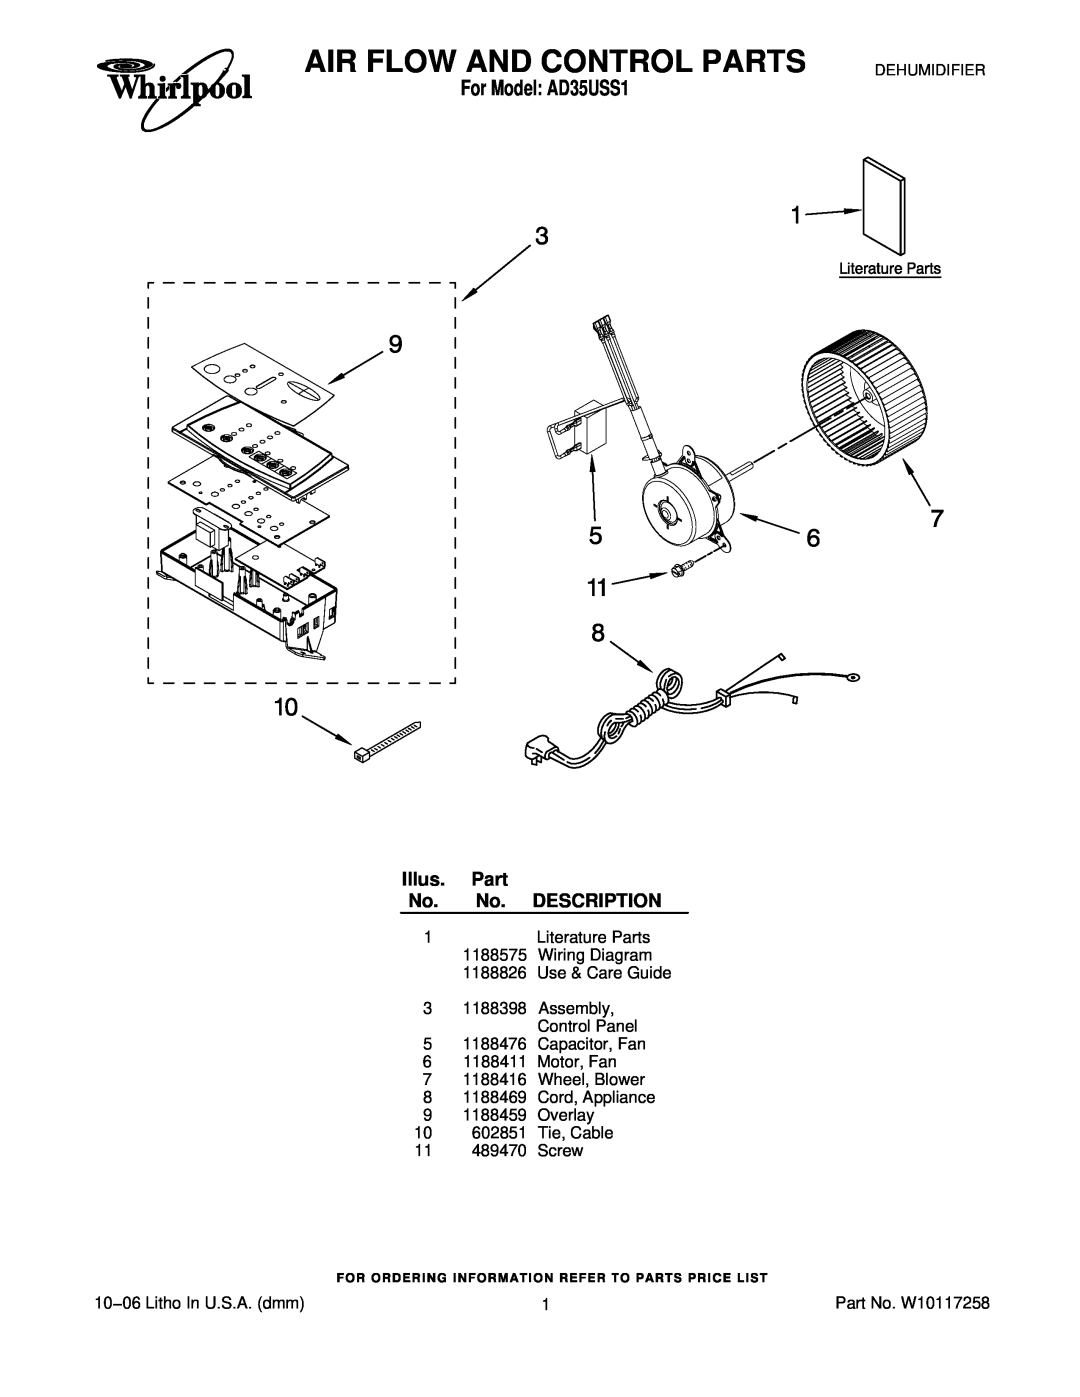 Whirlpool manual For Model AD35USS1, Illus. Part No. No. DESCRIPTION, Air Flow And Control Parts, Dehumidifier 